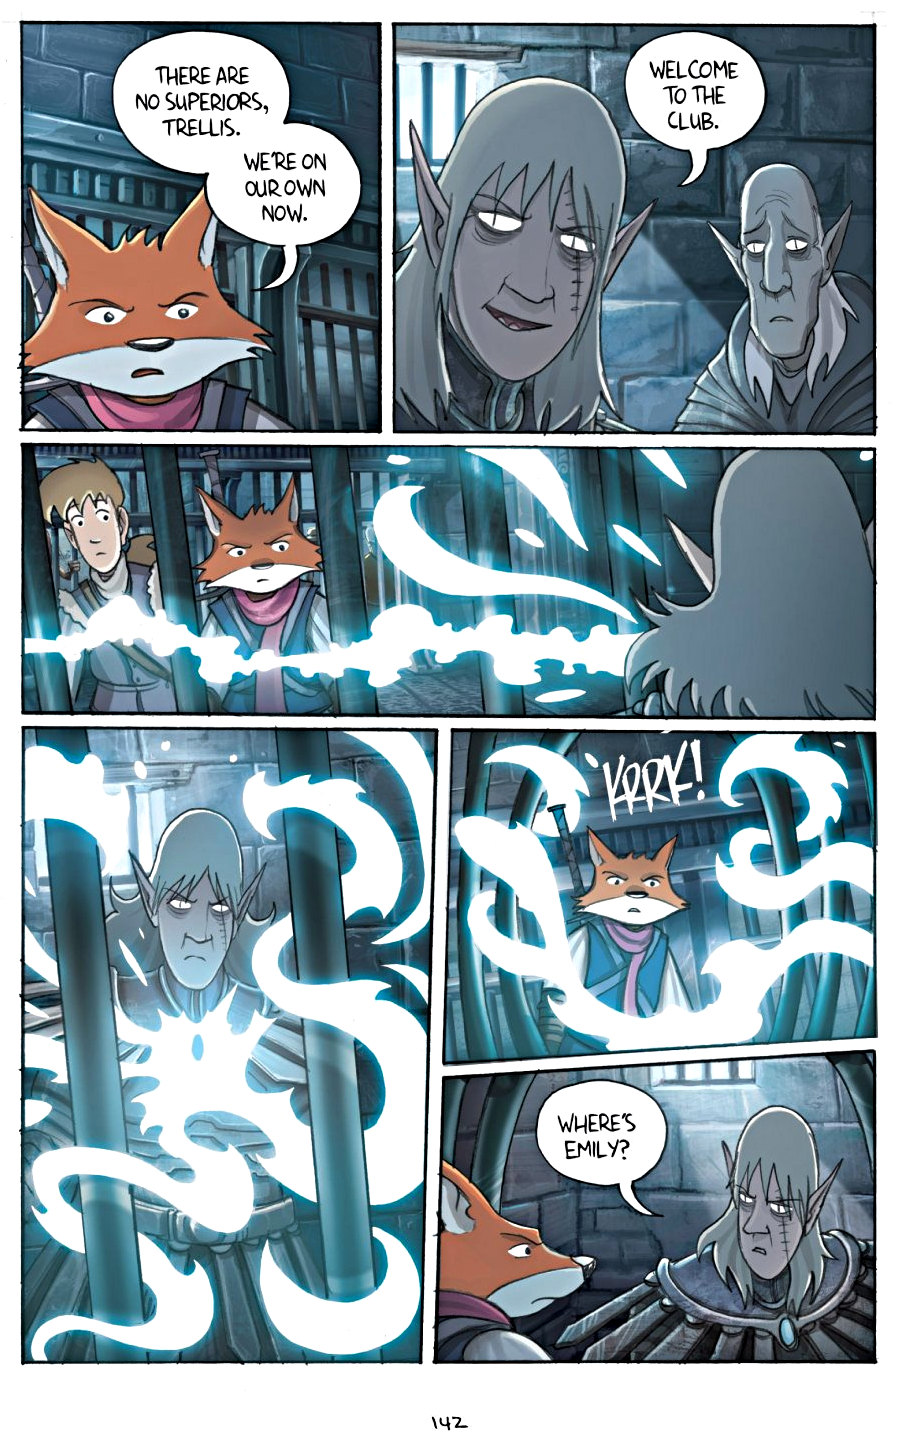 page 142 of amulet 4 last council graphic novel by kazu kibuishi